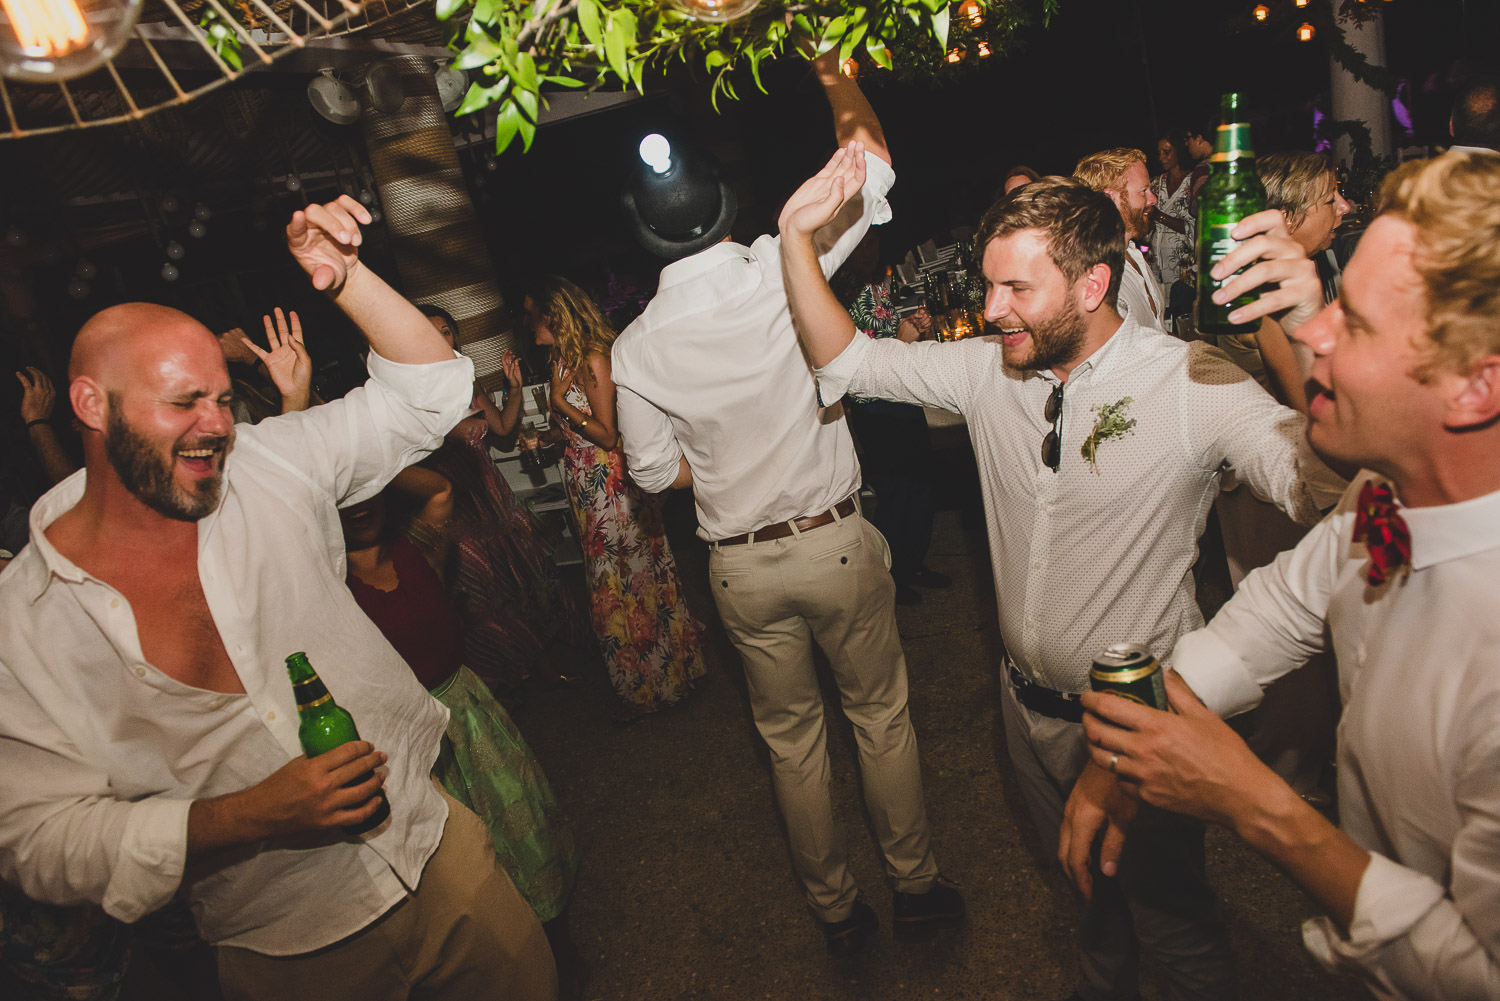 Wedding photographer Mykonos: men jumping on the dance floor at Elia during Mykonos wedding.